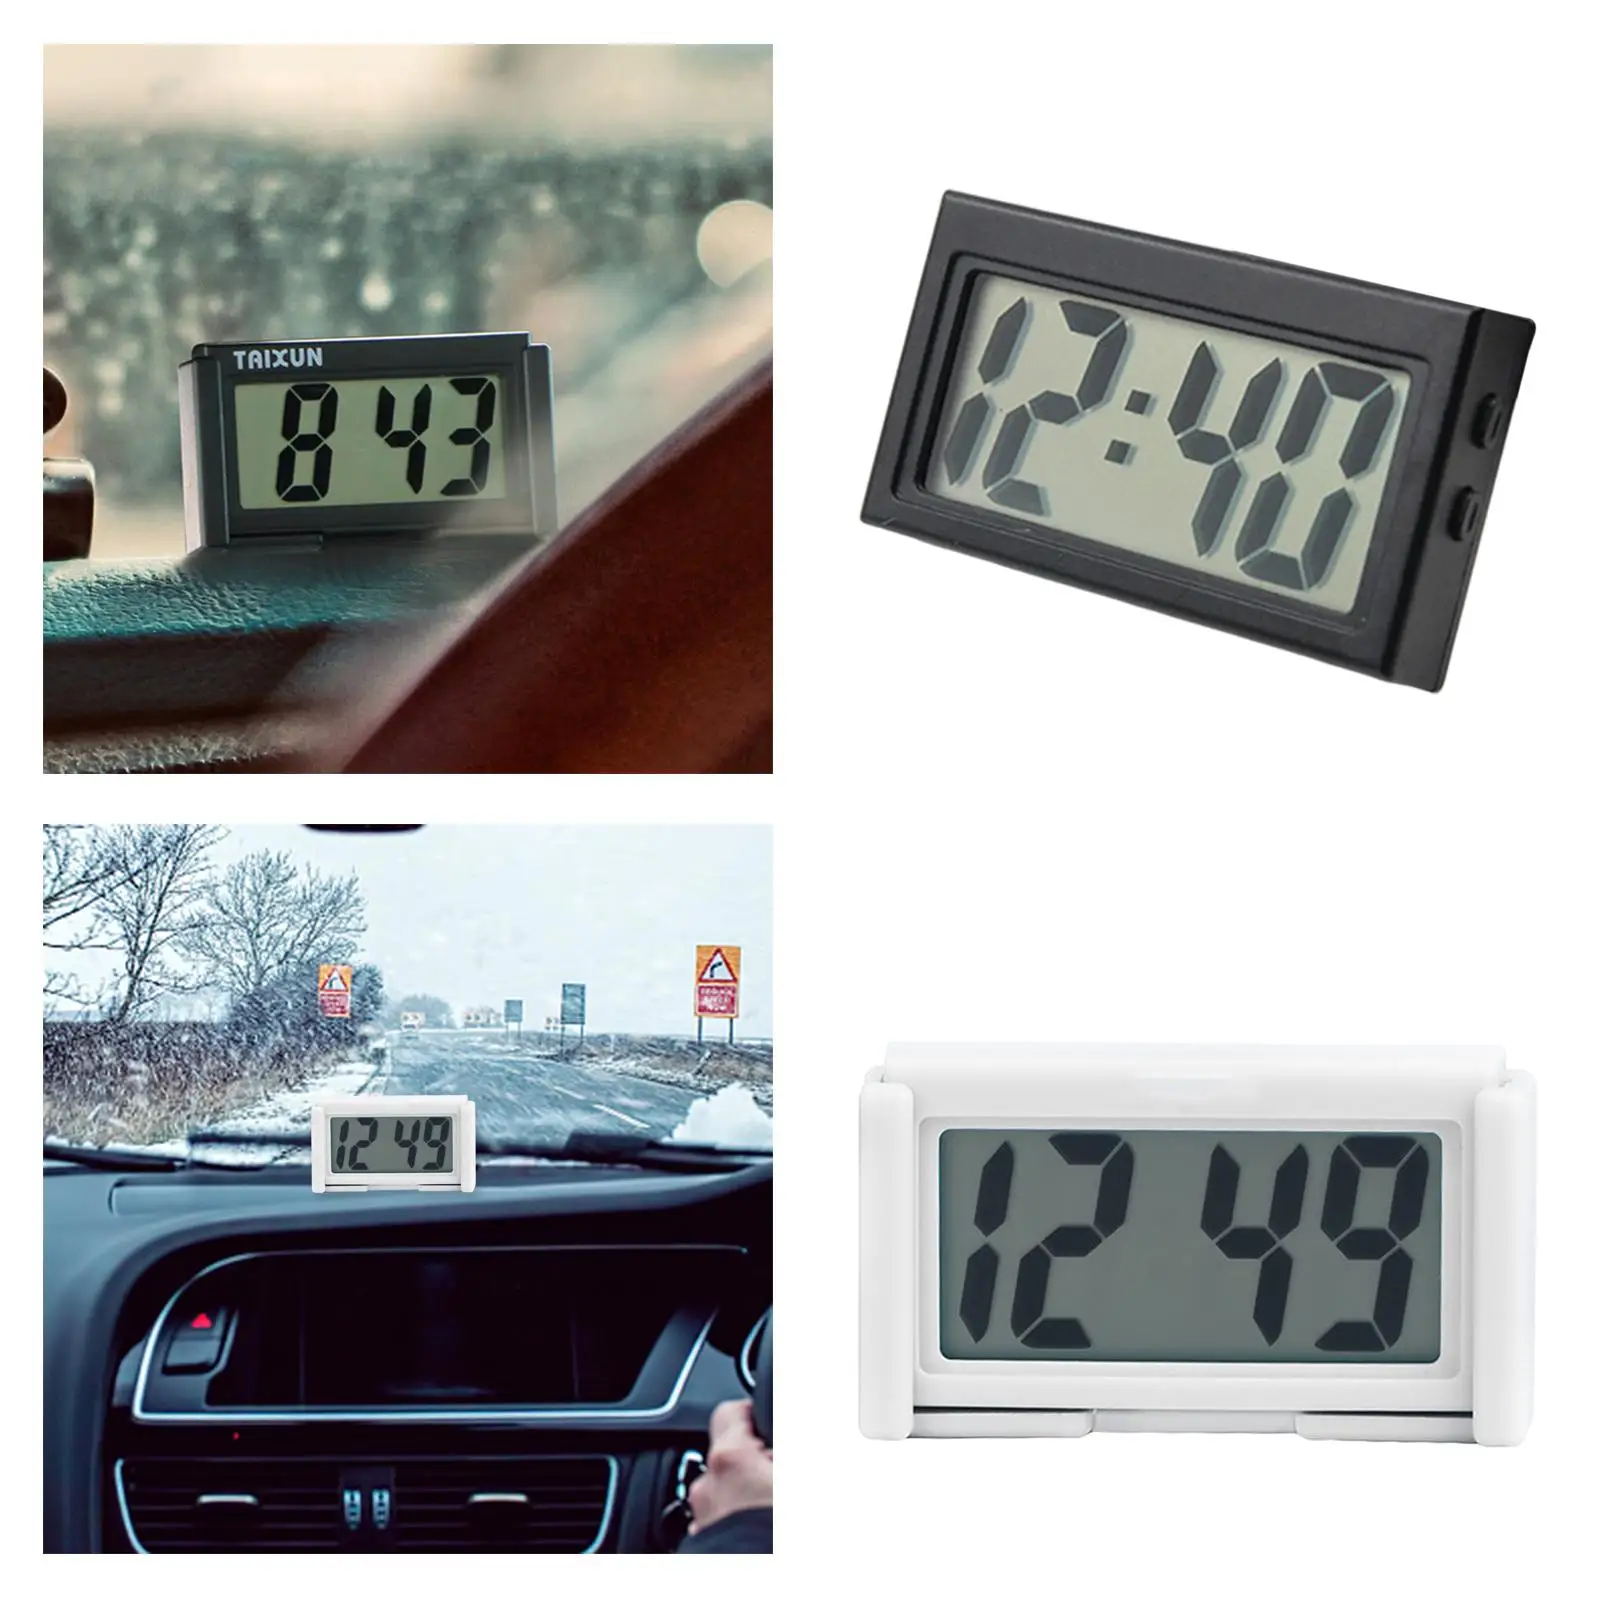 Mini Car Clock Time Date Display LCD Screen Auto Car Truck Dashboard Time